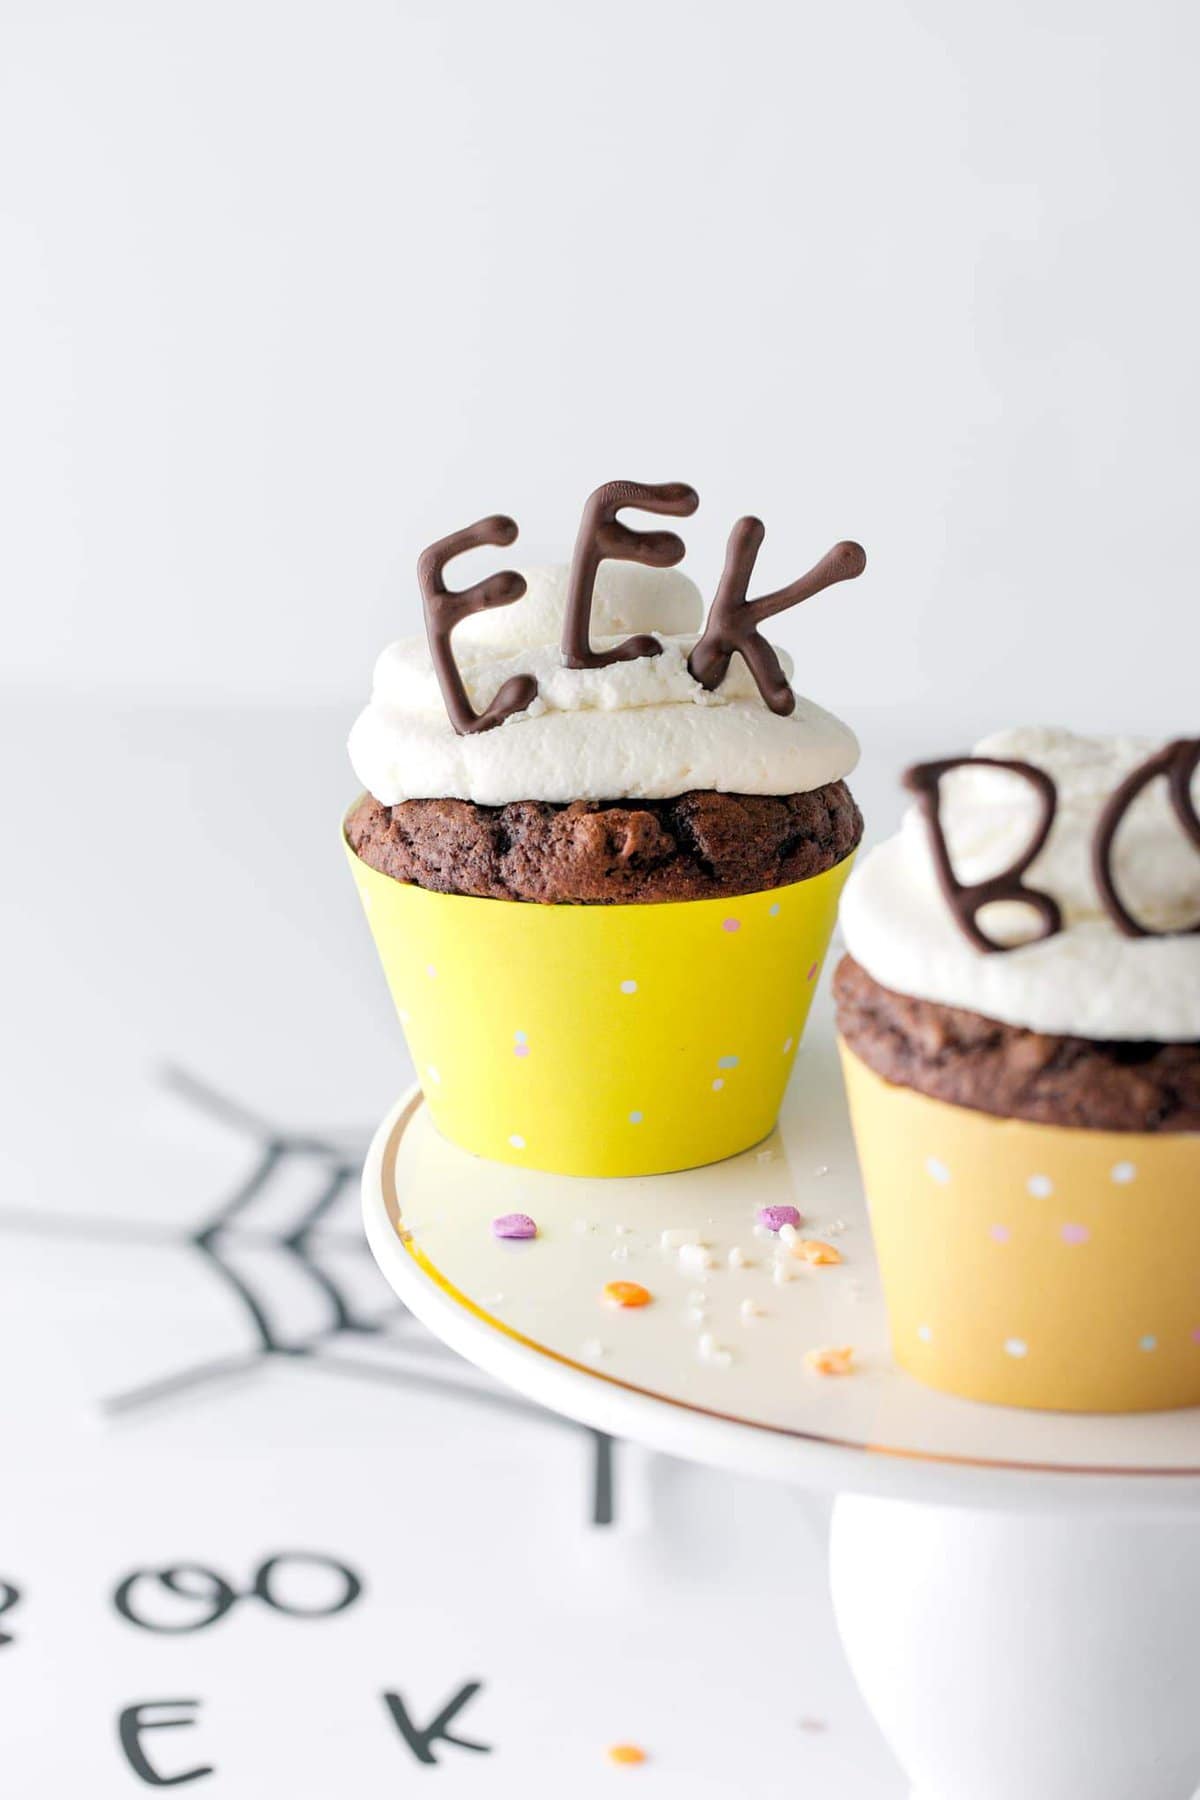 Chocolate cupcake with EEK edible Halloween cupcake topper.